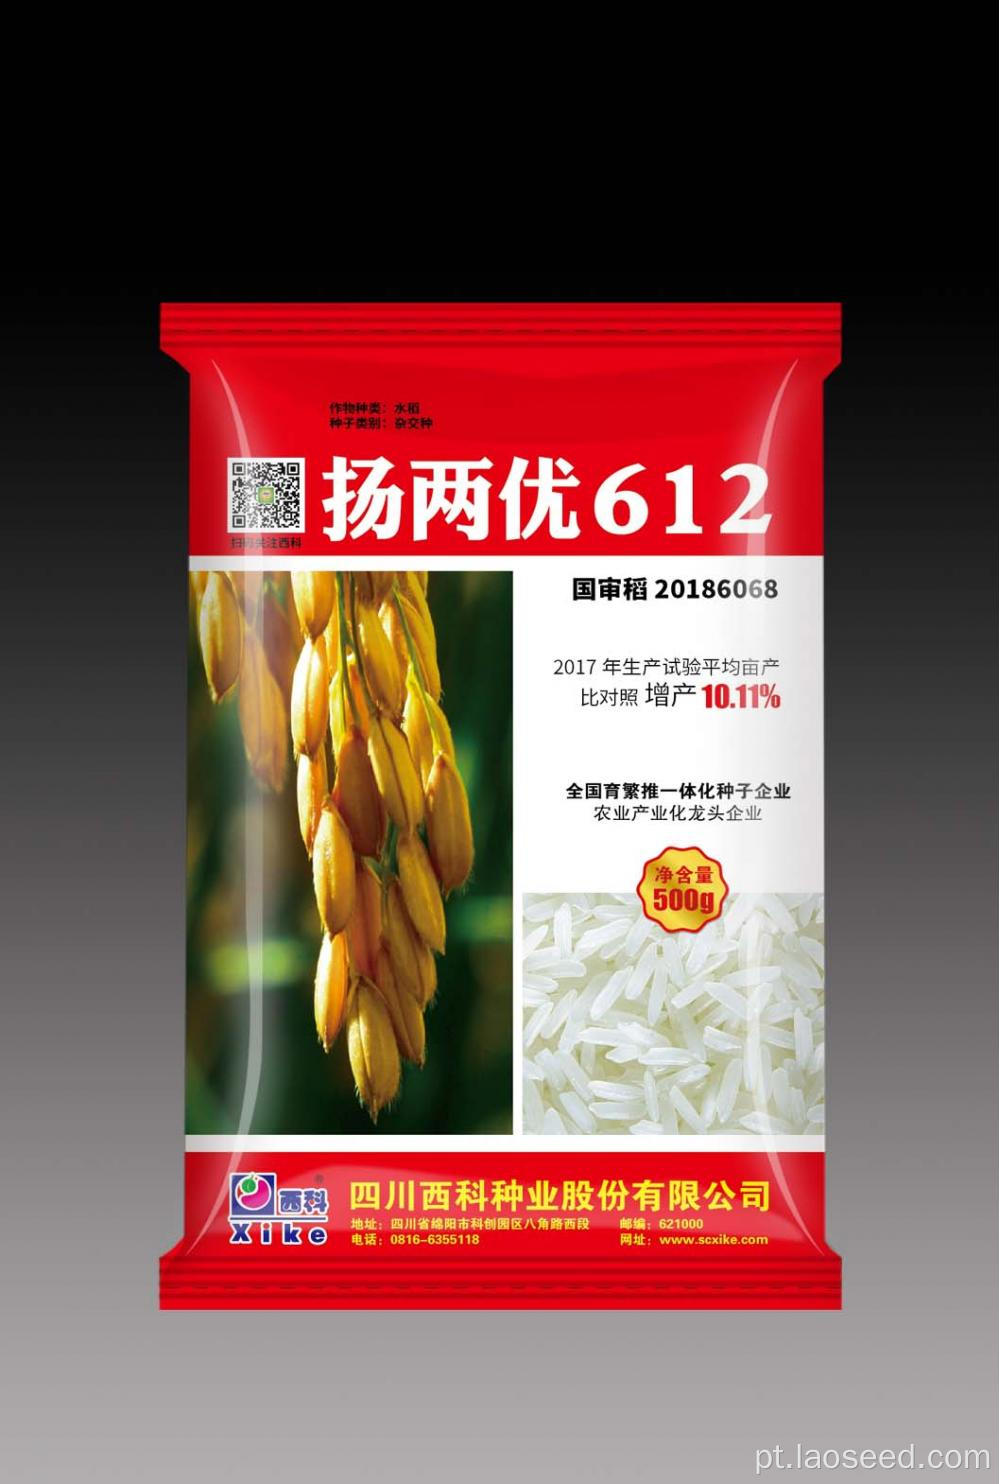 Semente de arroz yangliangyou 612